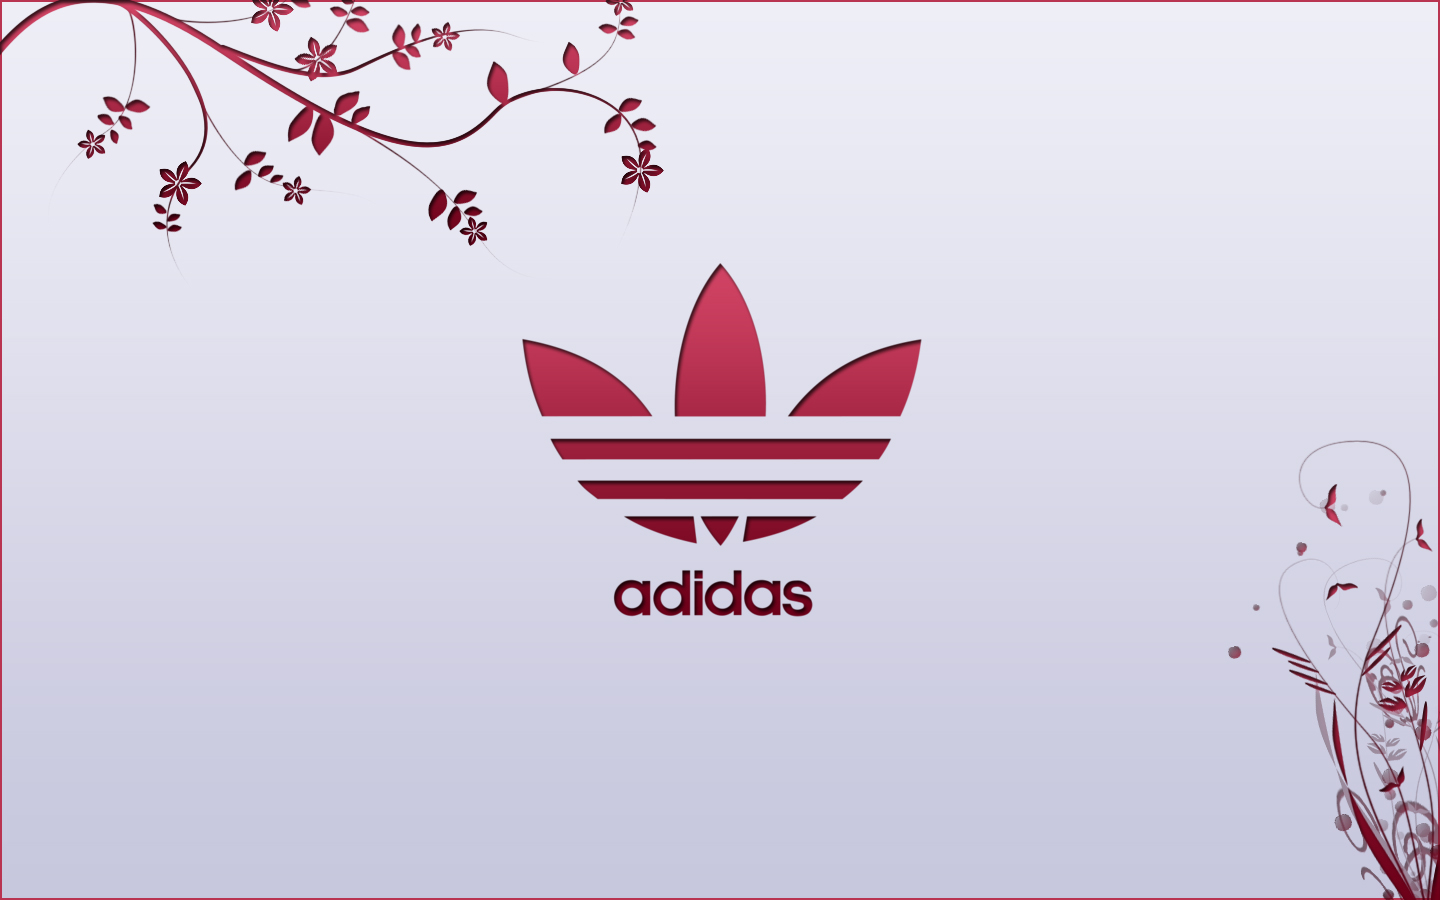 Adidas wallpaper floral ImageBankbiz 1440x900